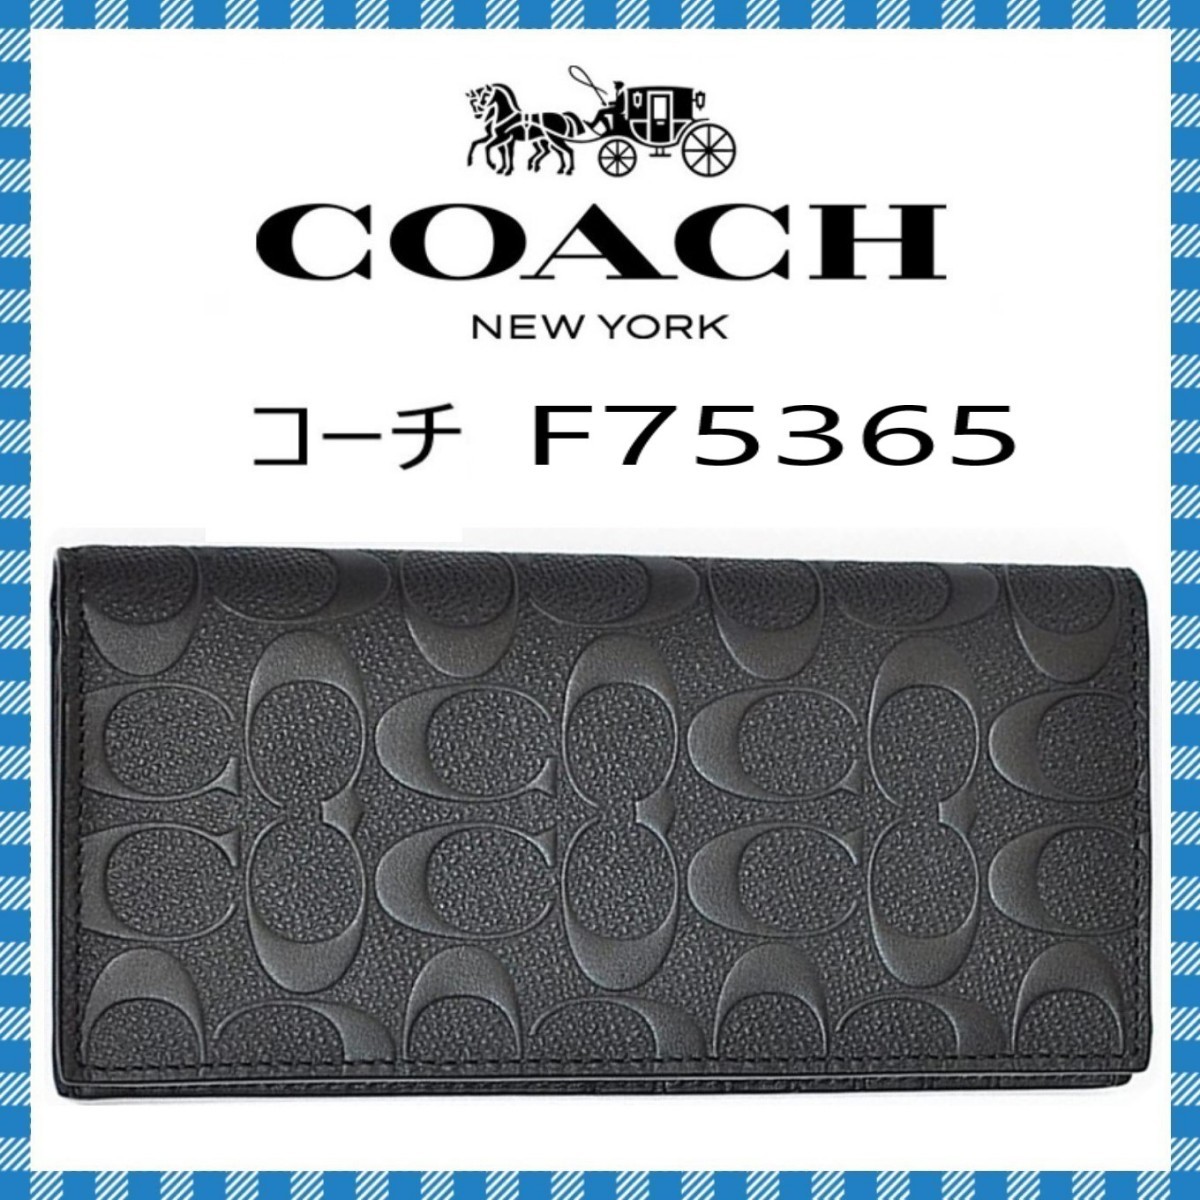 COACH　メンズ長財布●シグネチャーメンズウォレット・エンボス・75365　●コーチアウトレット・新品・未使用品♪